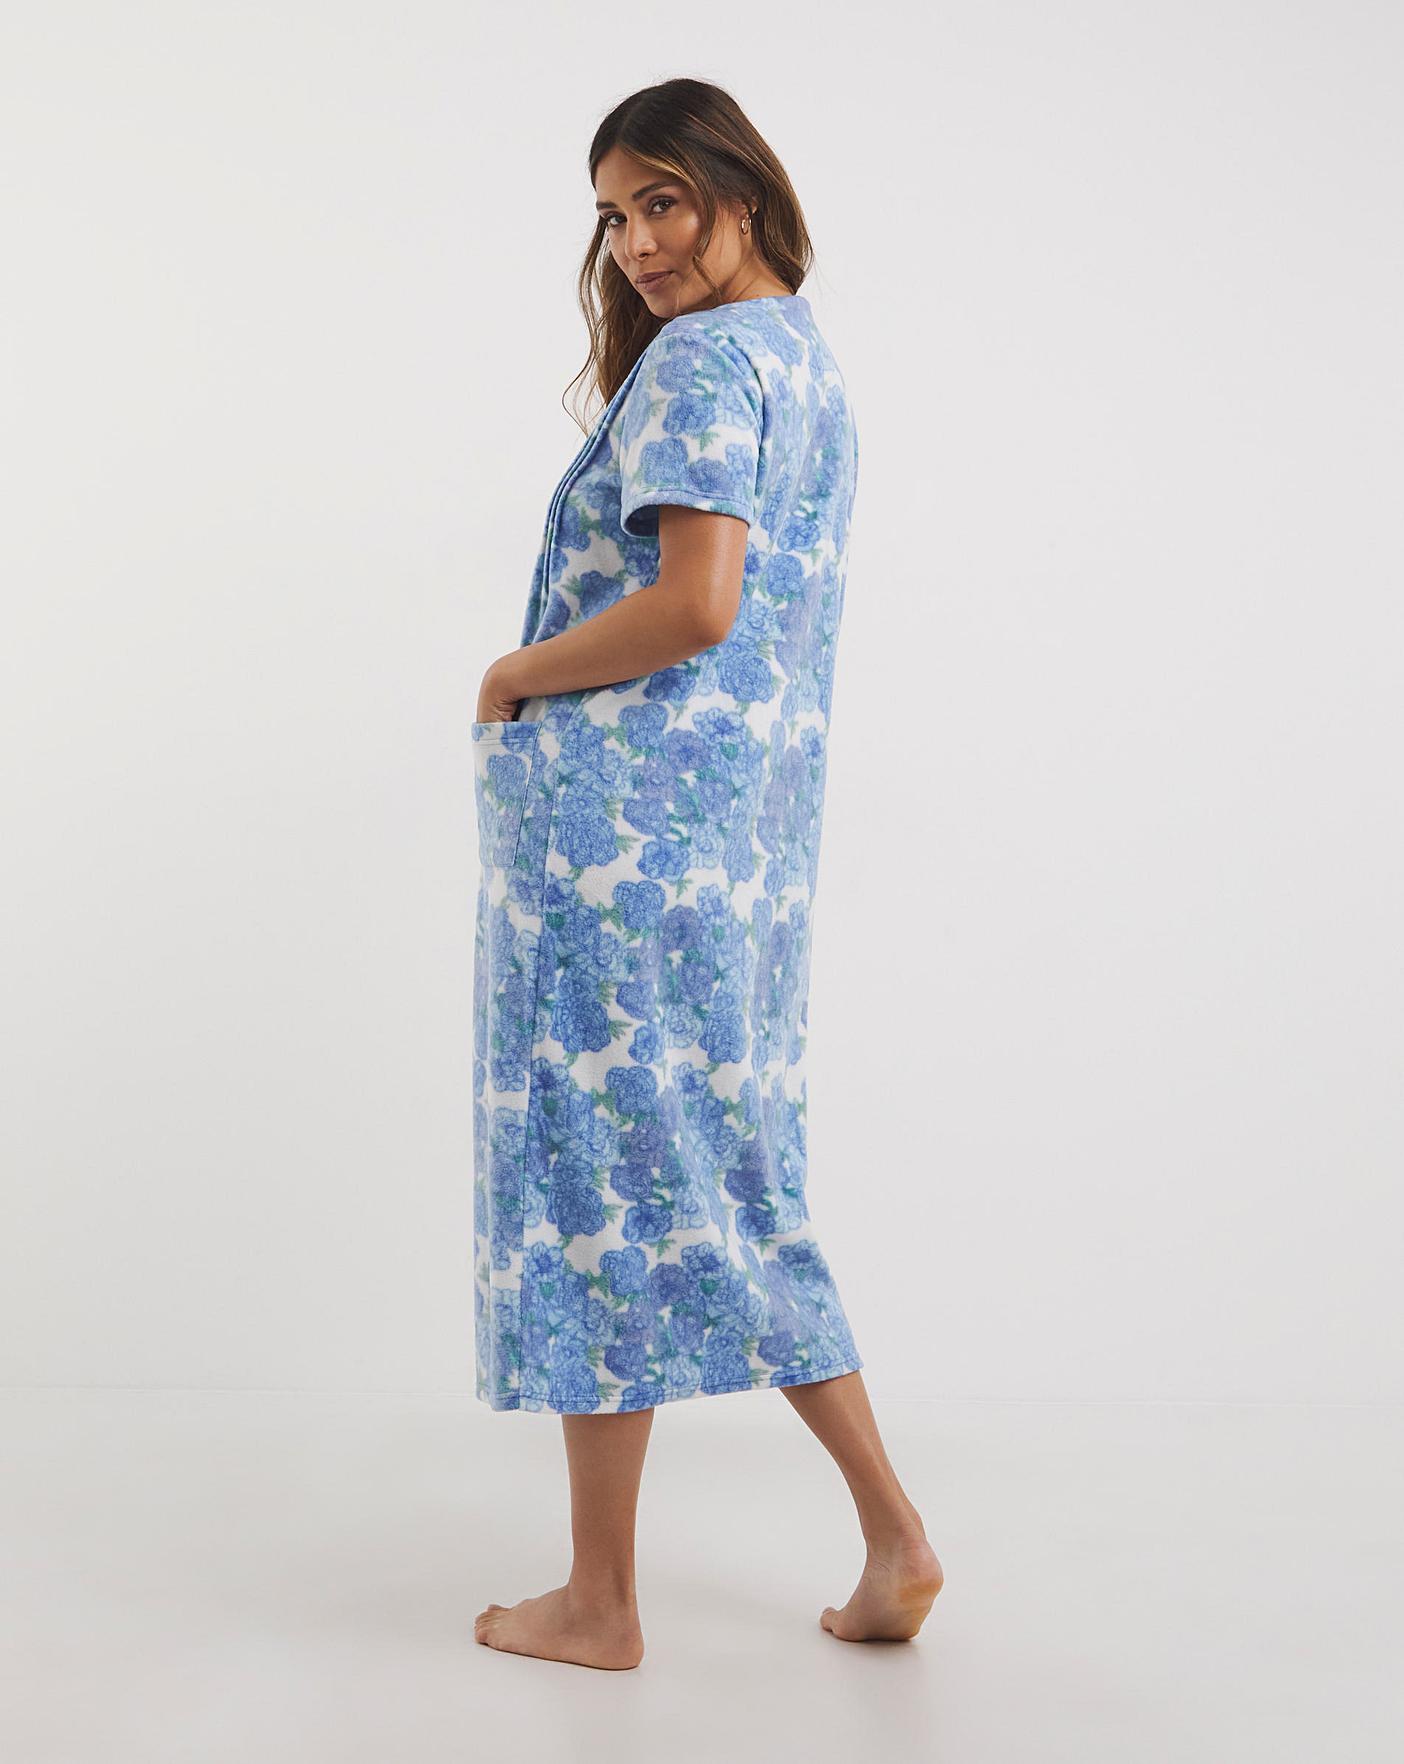 Ladies Nightwear, Fleece, Button, Cosy Nightdresses & Pyjamas for Women UK